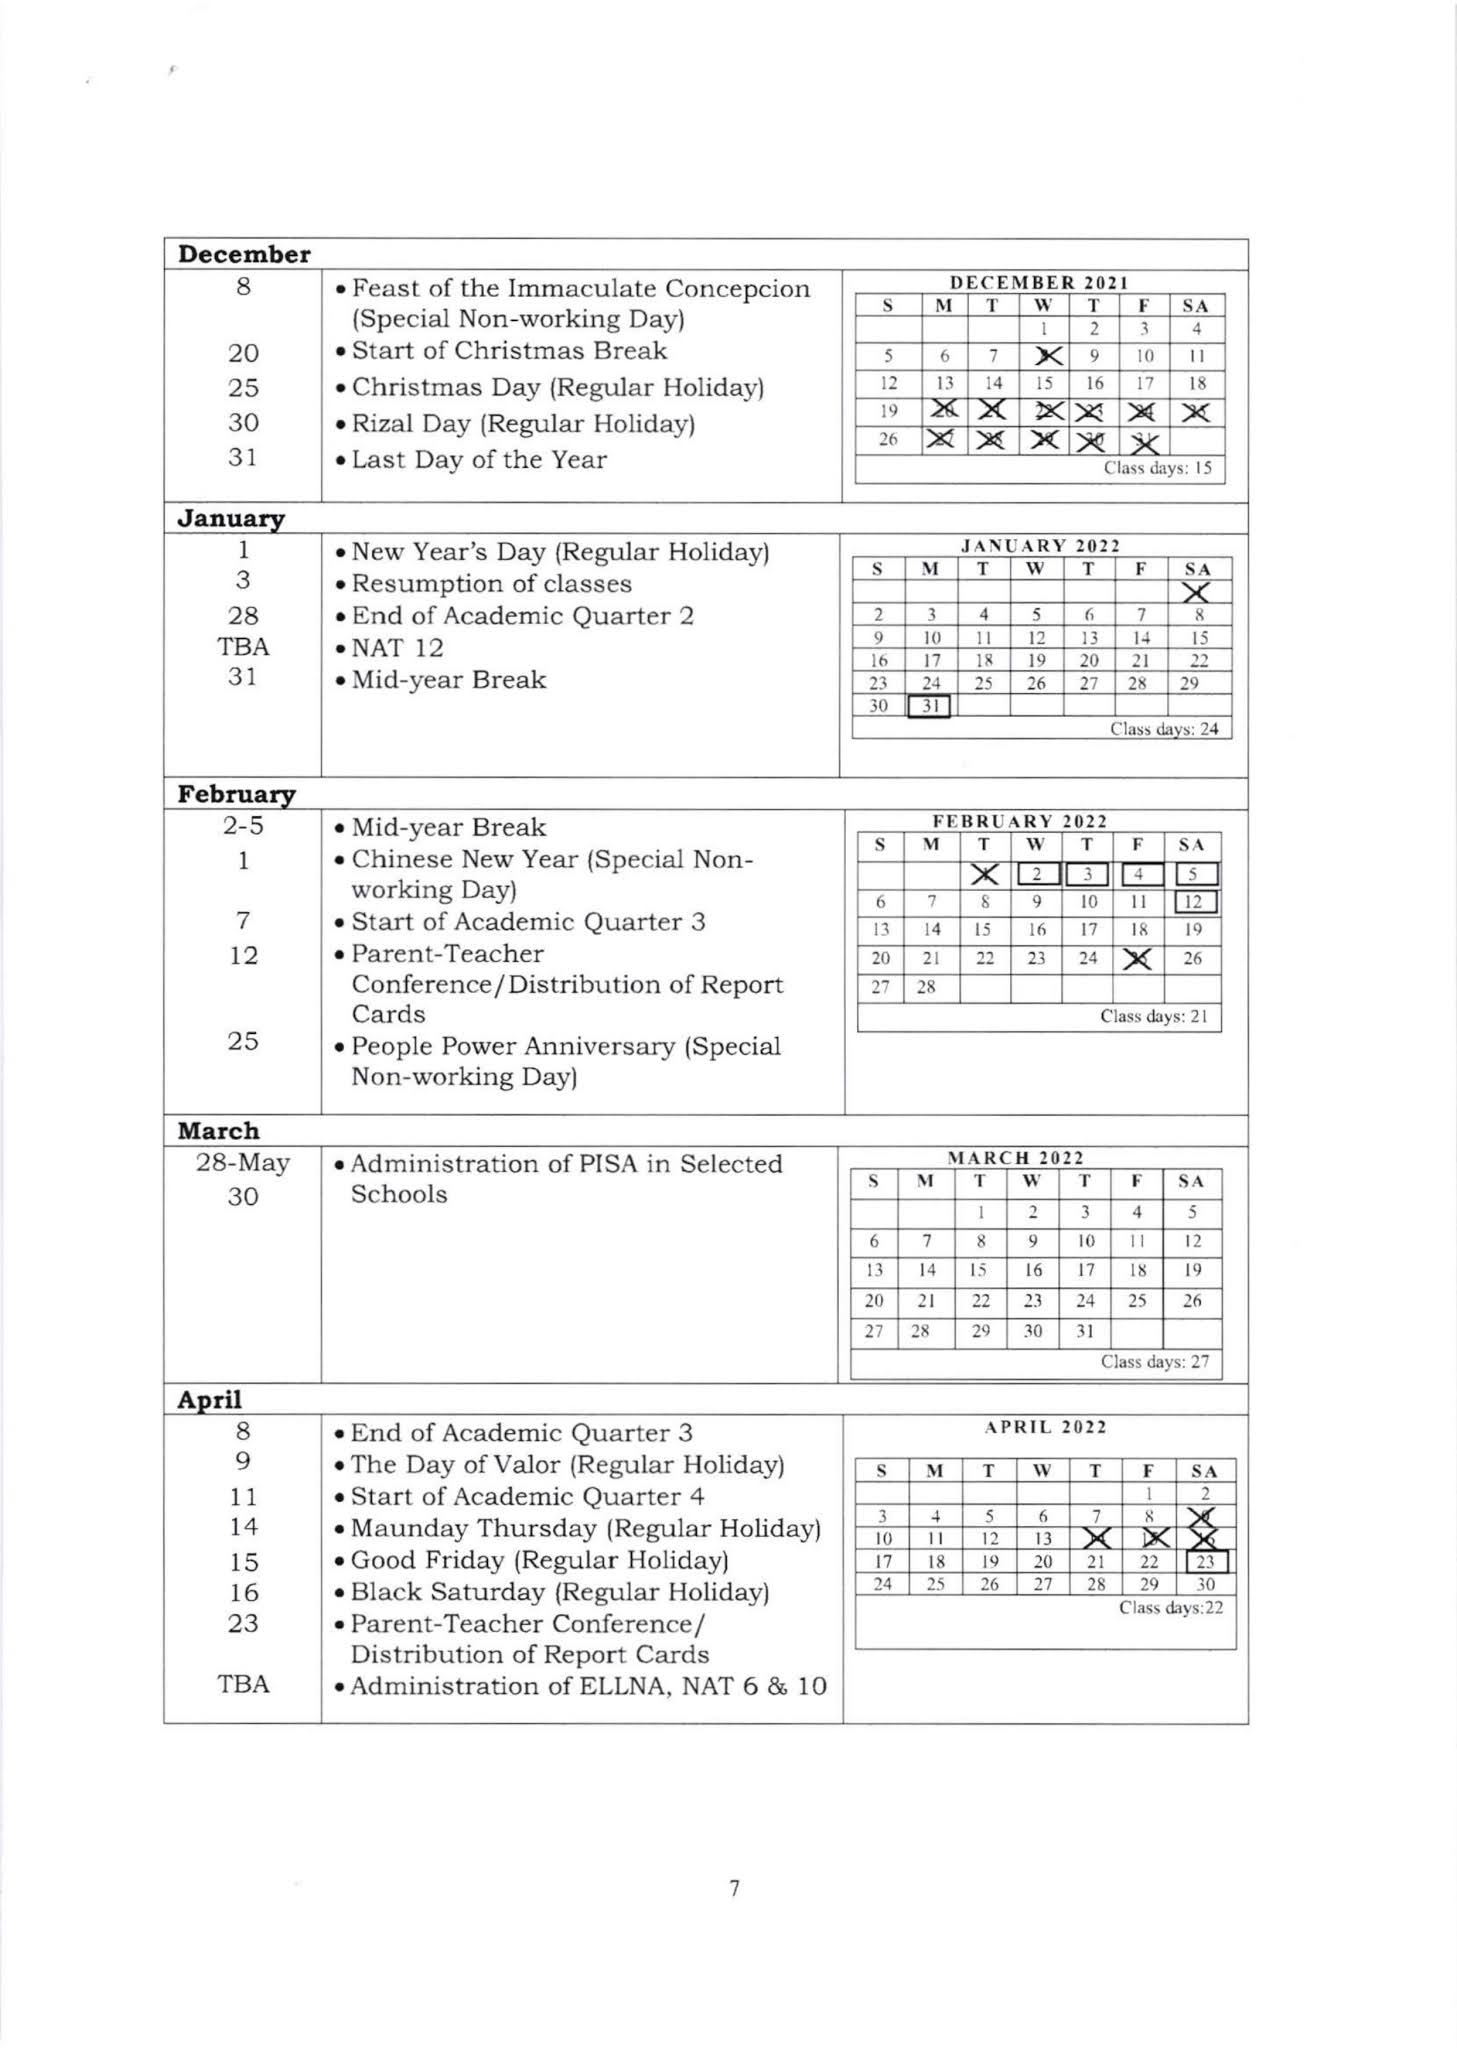 school-calendar-how-to-create-a-school-calendar-download-this-school